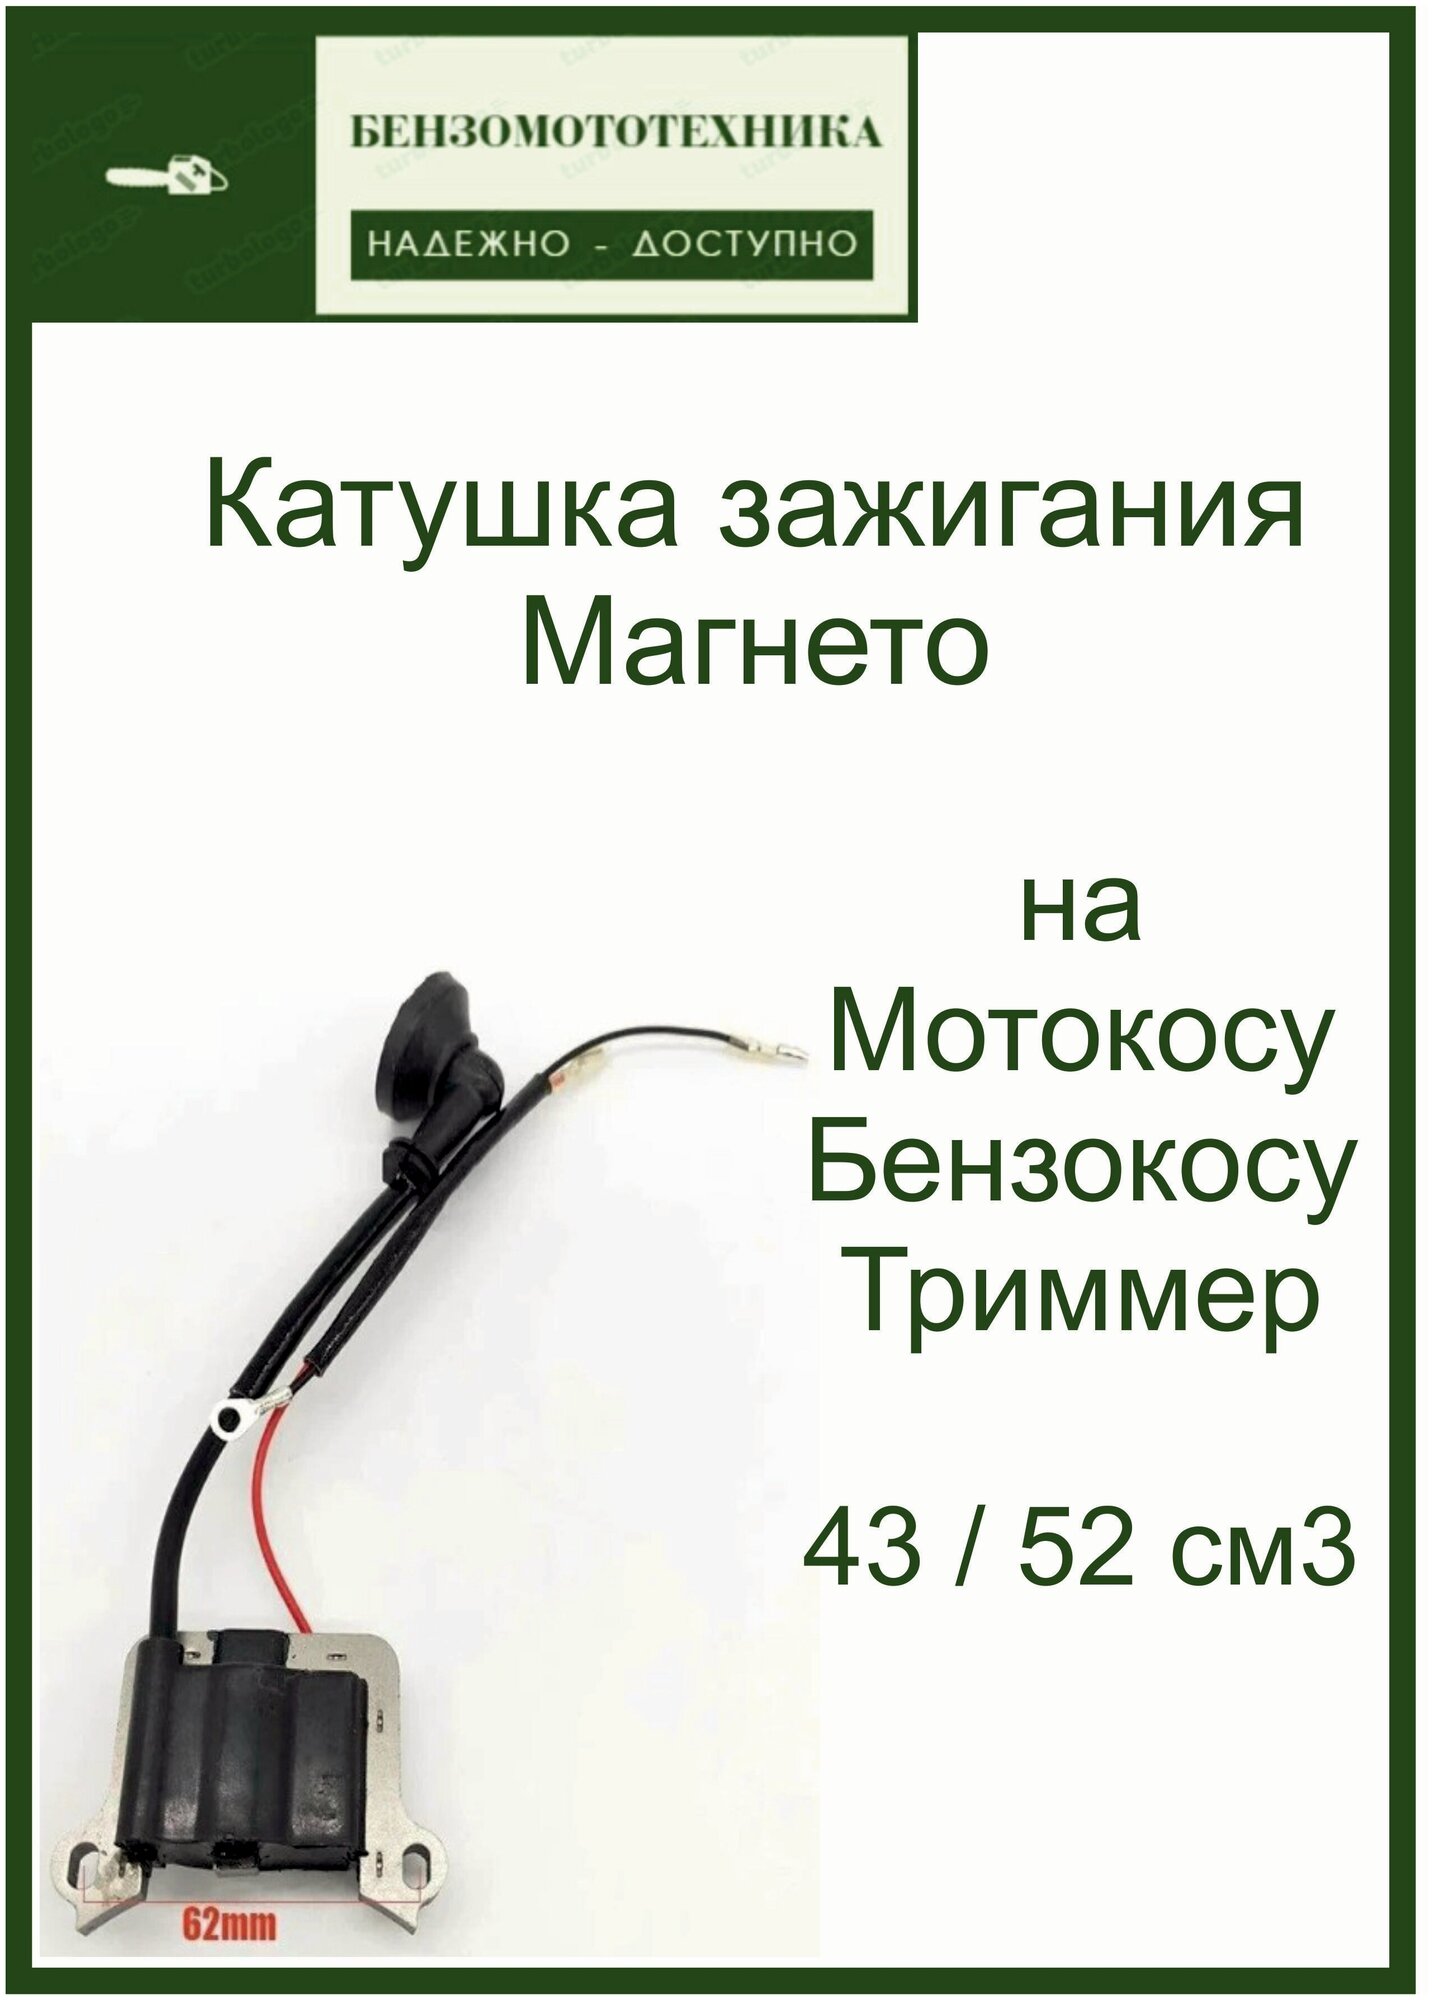 Катушка зажигания магнето на триммер, мотокосу, бензокосу 43 / 52 см3